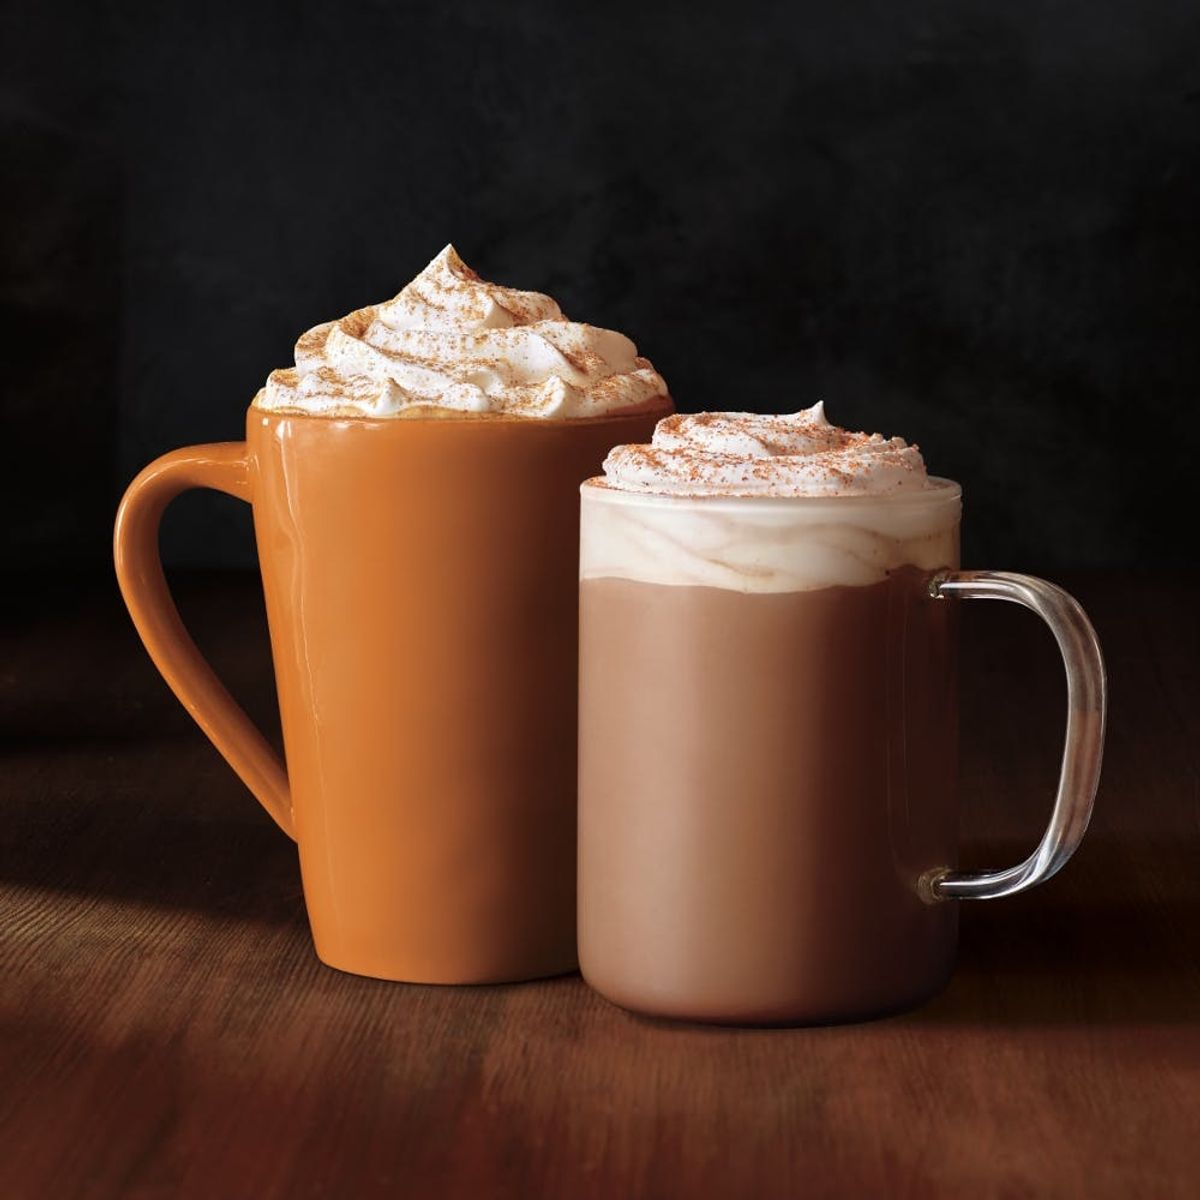 Starbucks Just Introduced a Limited Edition Barista Originals Menu